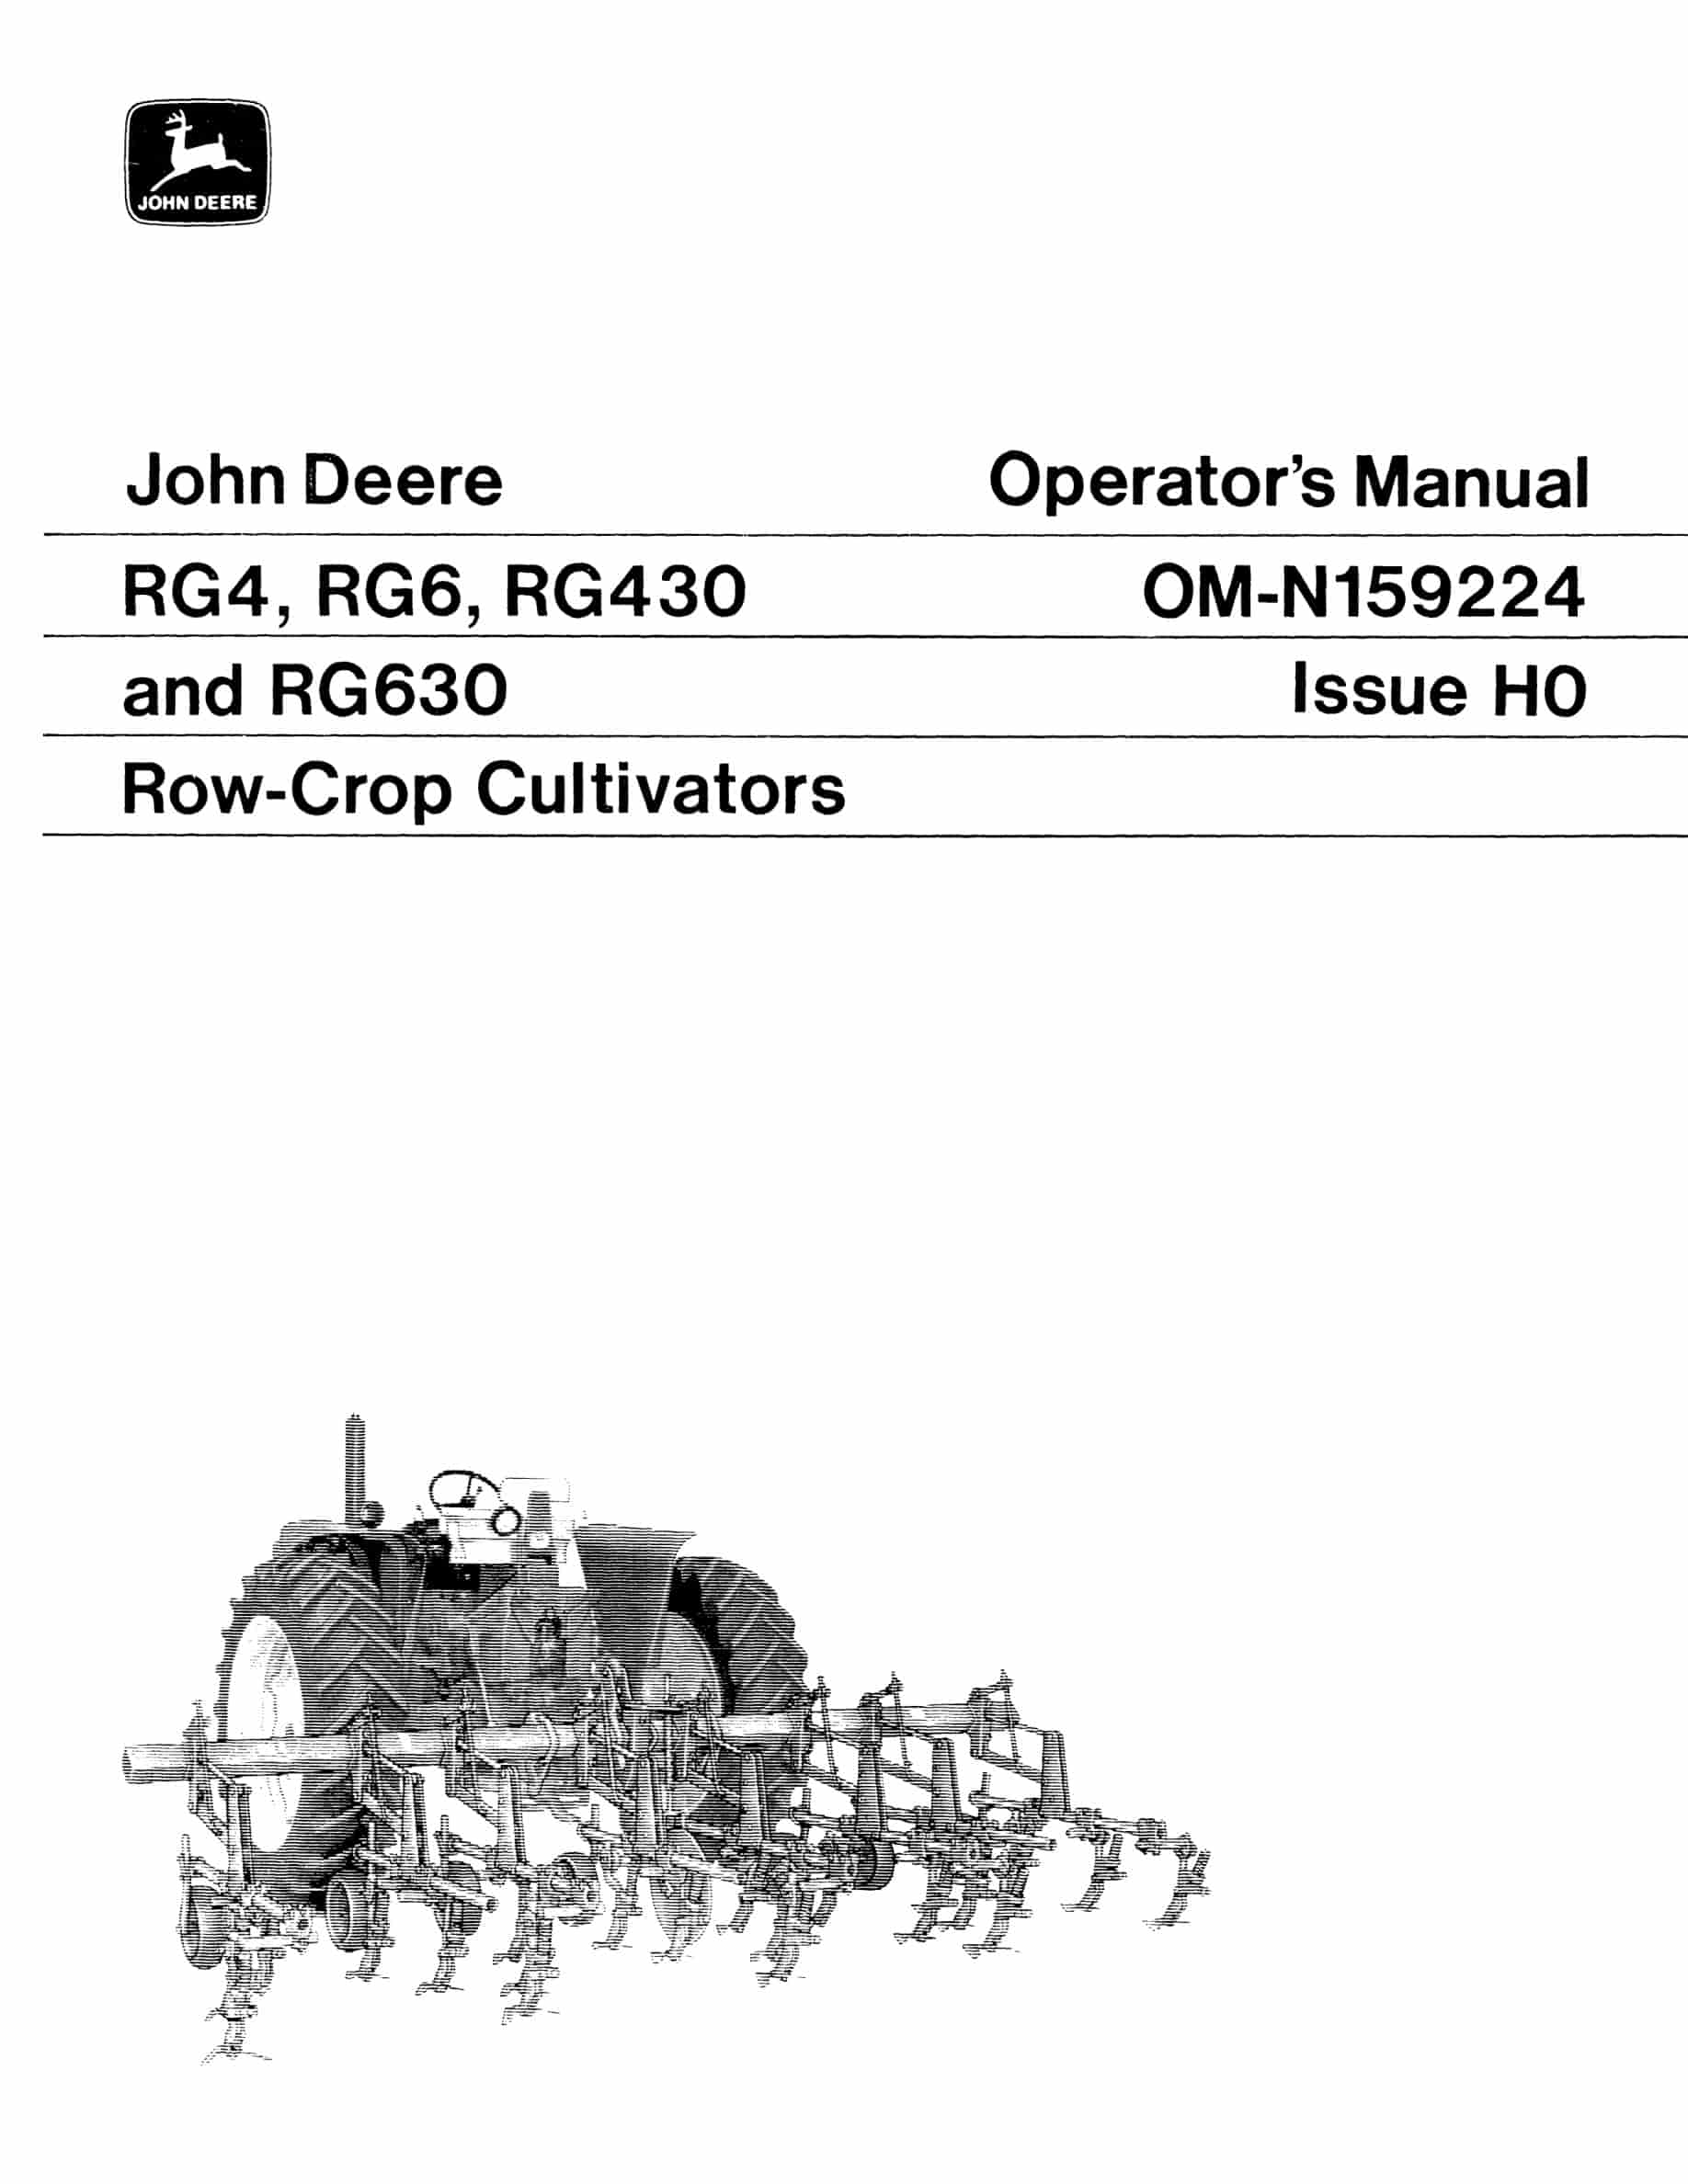 John Deere RG4 RG6 RG530 and RG630 Row Crop CULTIVATOR Operator Manual OMN159224-1